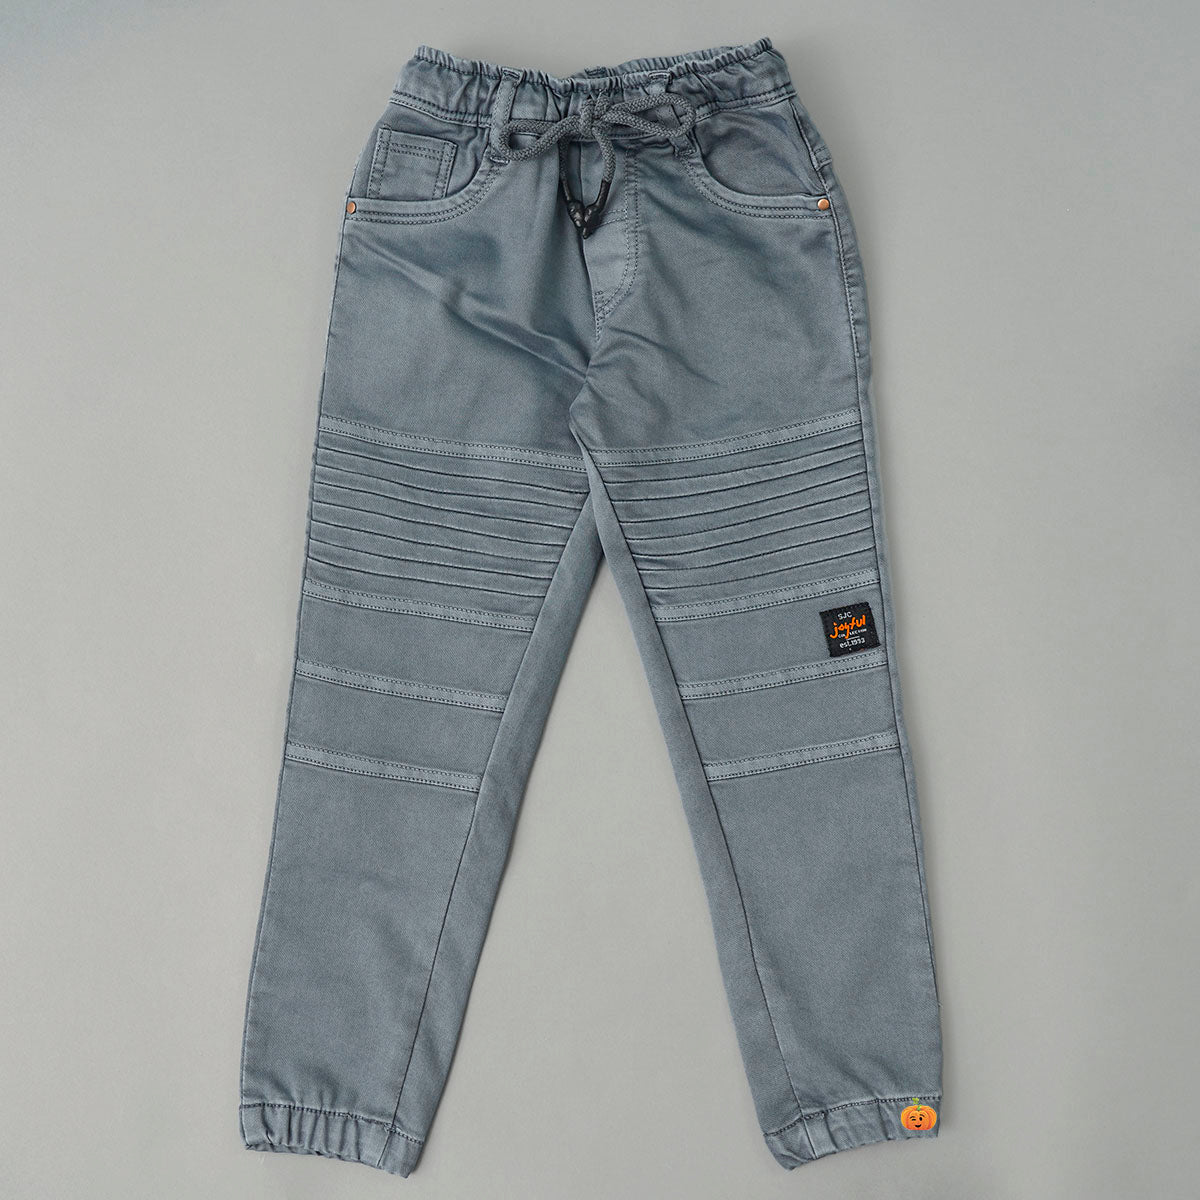 Disney Boys Jogger Pants Set, Athletic Sweatpants with Toy Story Print,  Blue/Grey, Size 4T - Walmart.com